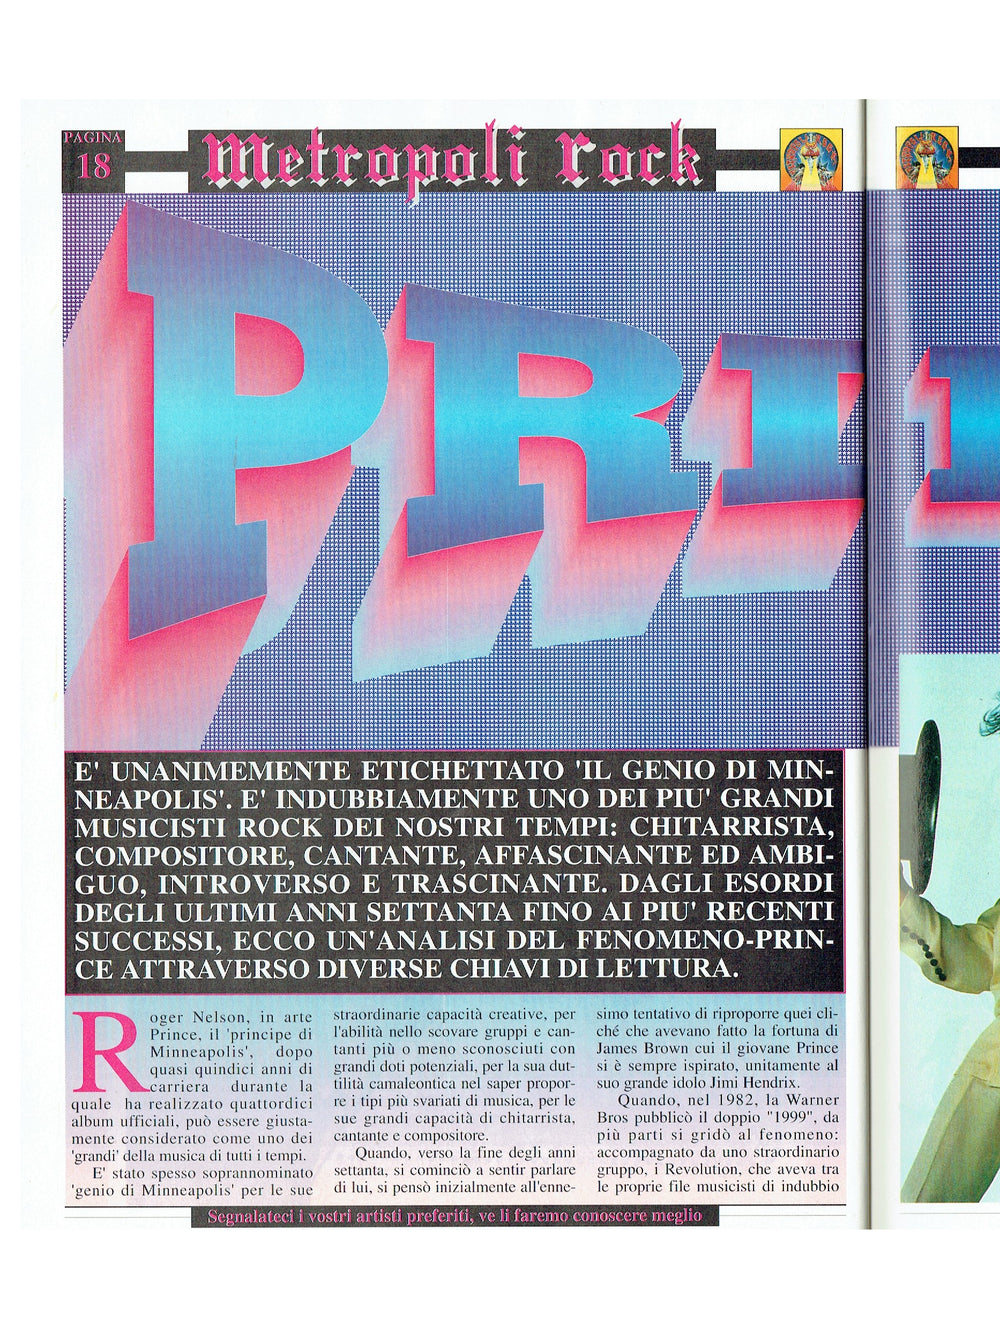 Prince Metropoli Rock Magazine November 1992 Cover & 10 Page Article Italian